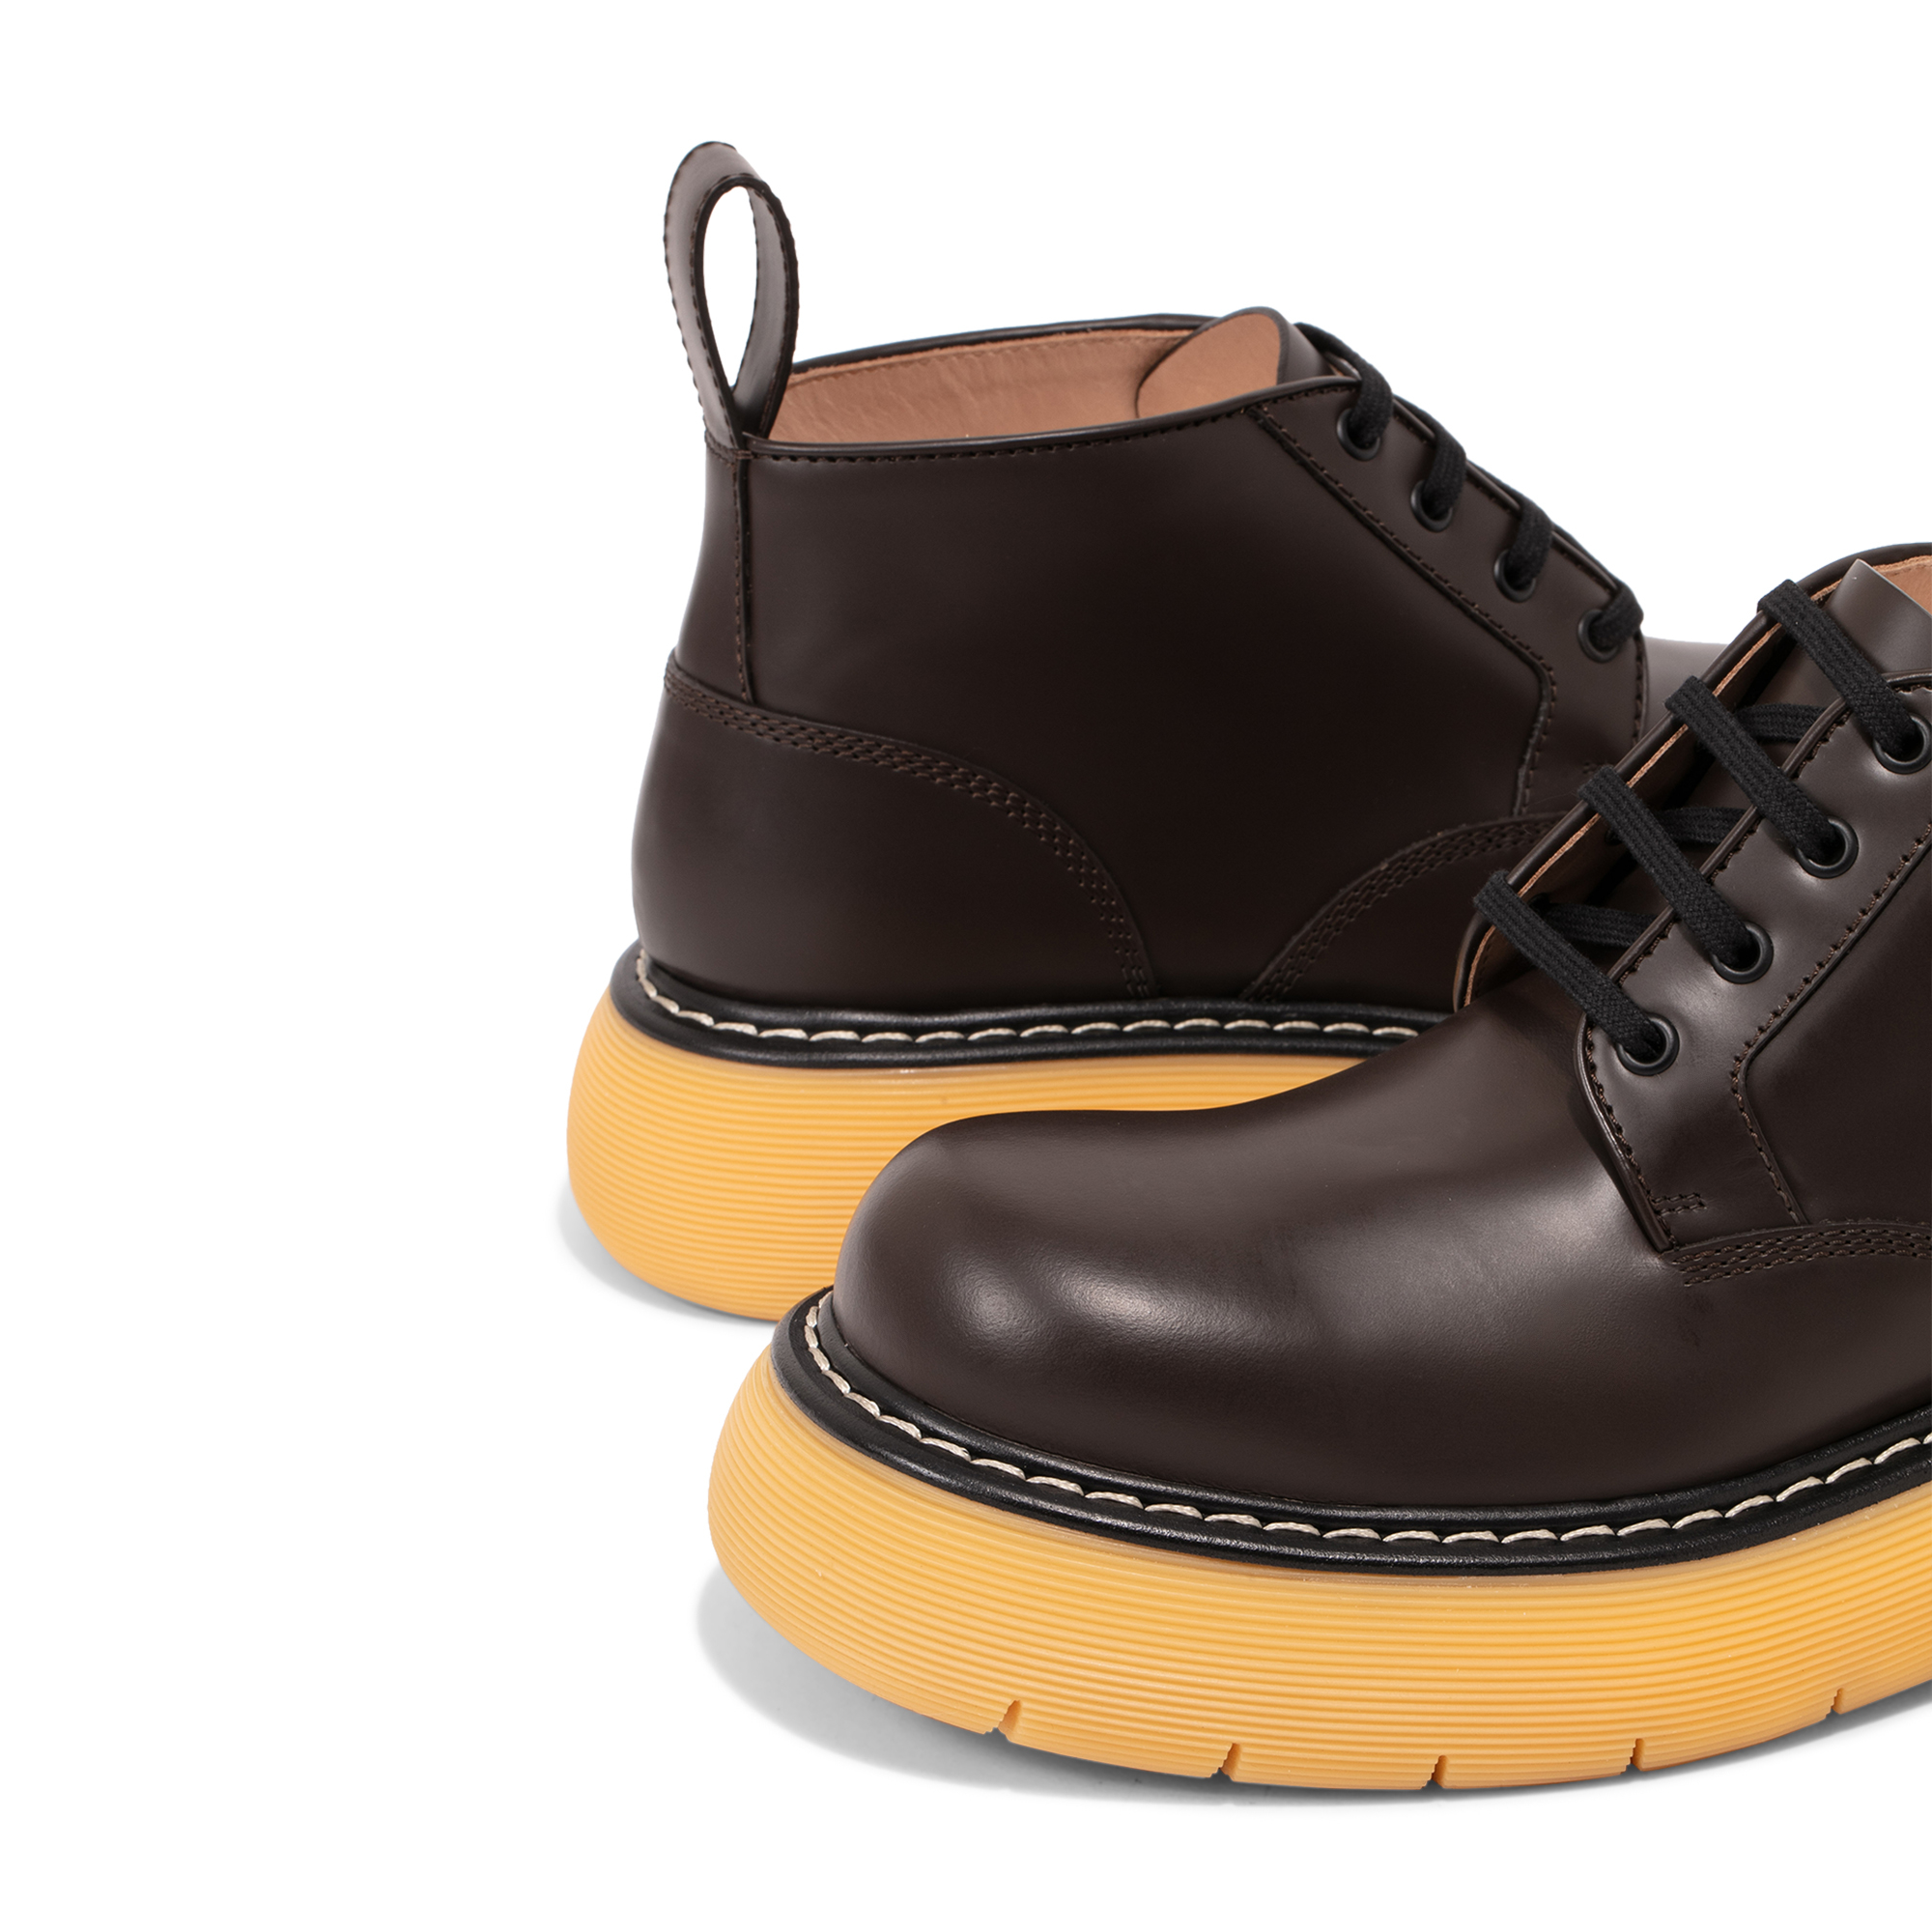 Bottega Veneta Bounce boots for Men - Brown in UAE